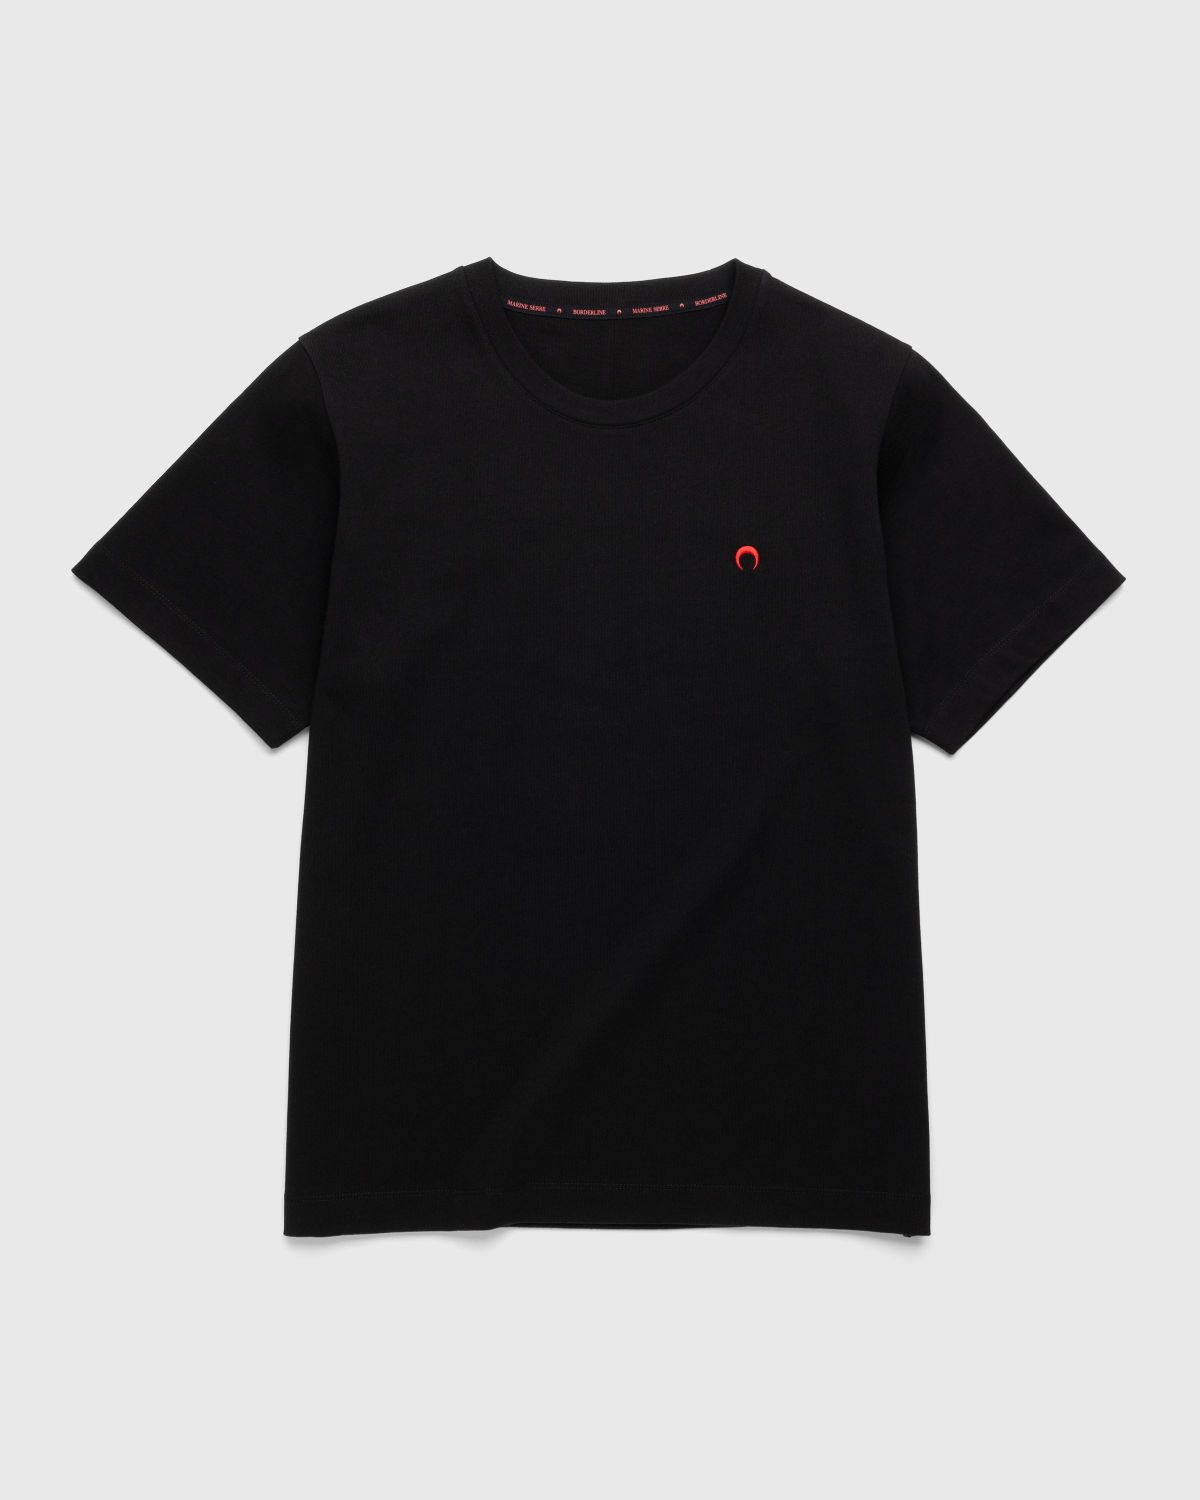 Marine Serre – Organic Cotton T-Shirt Black - Tops - Black - Image 1